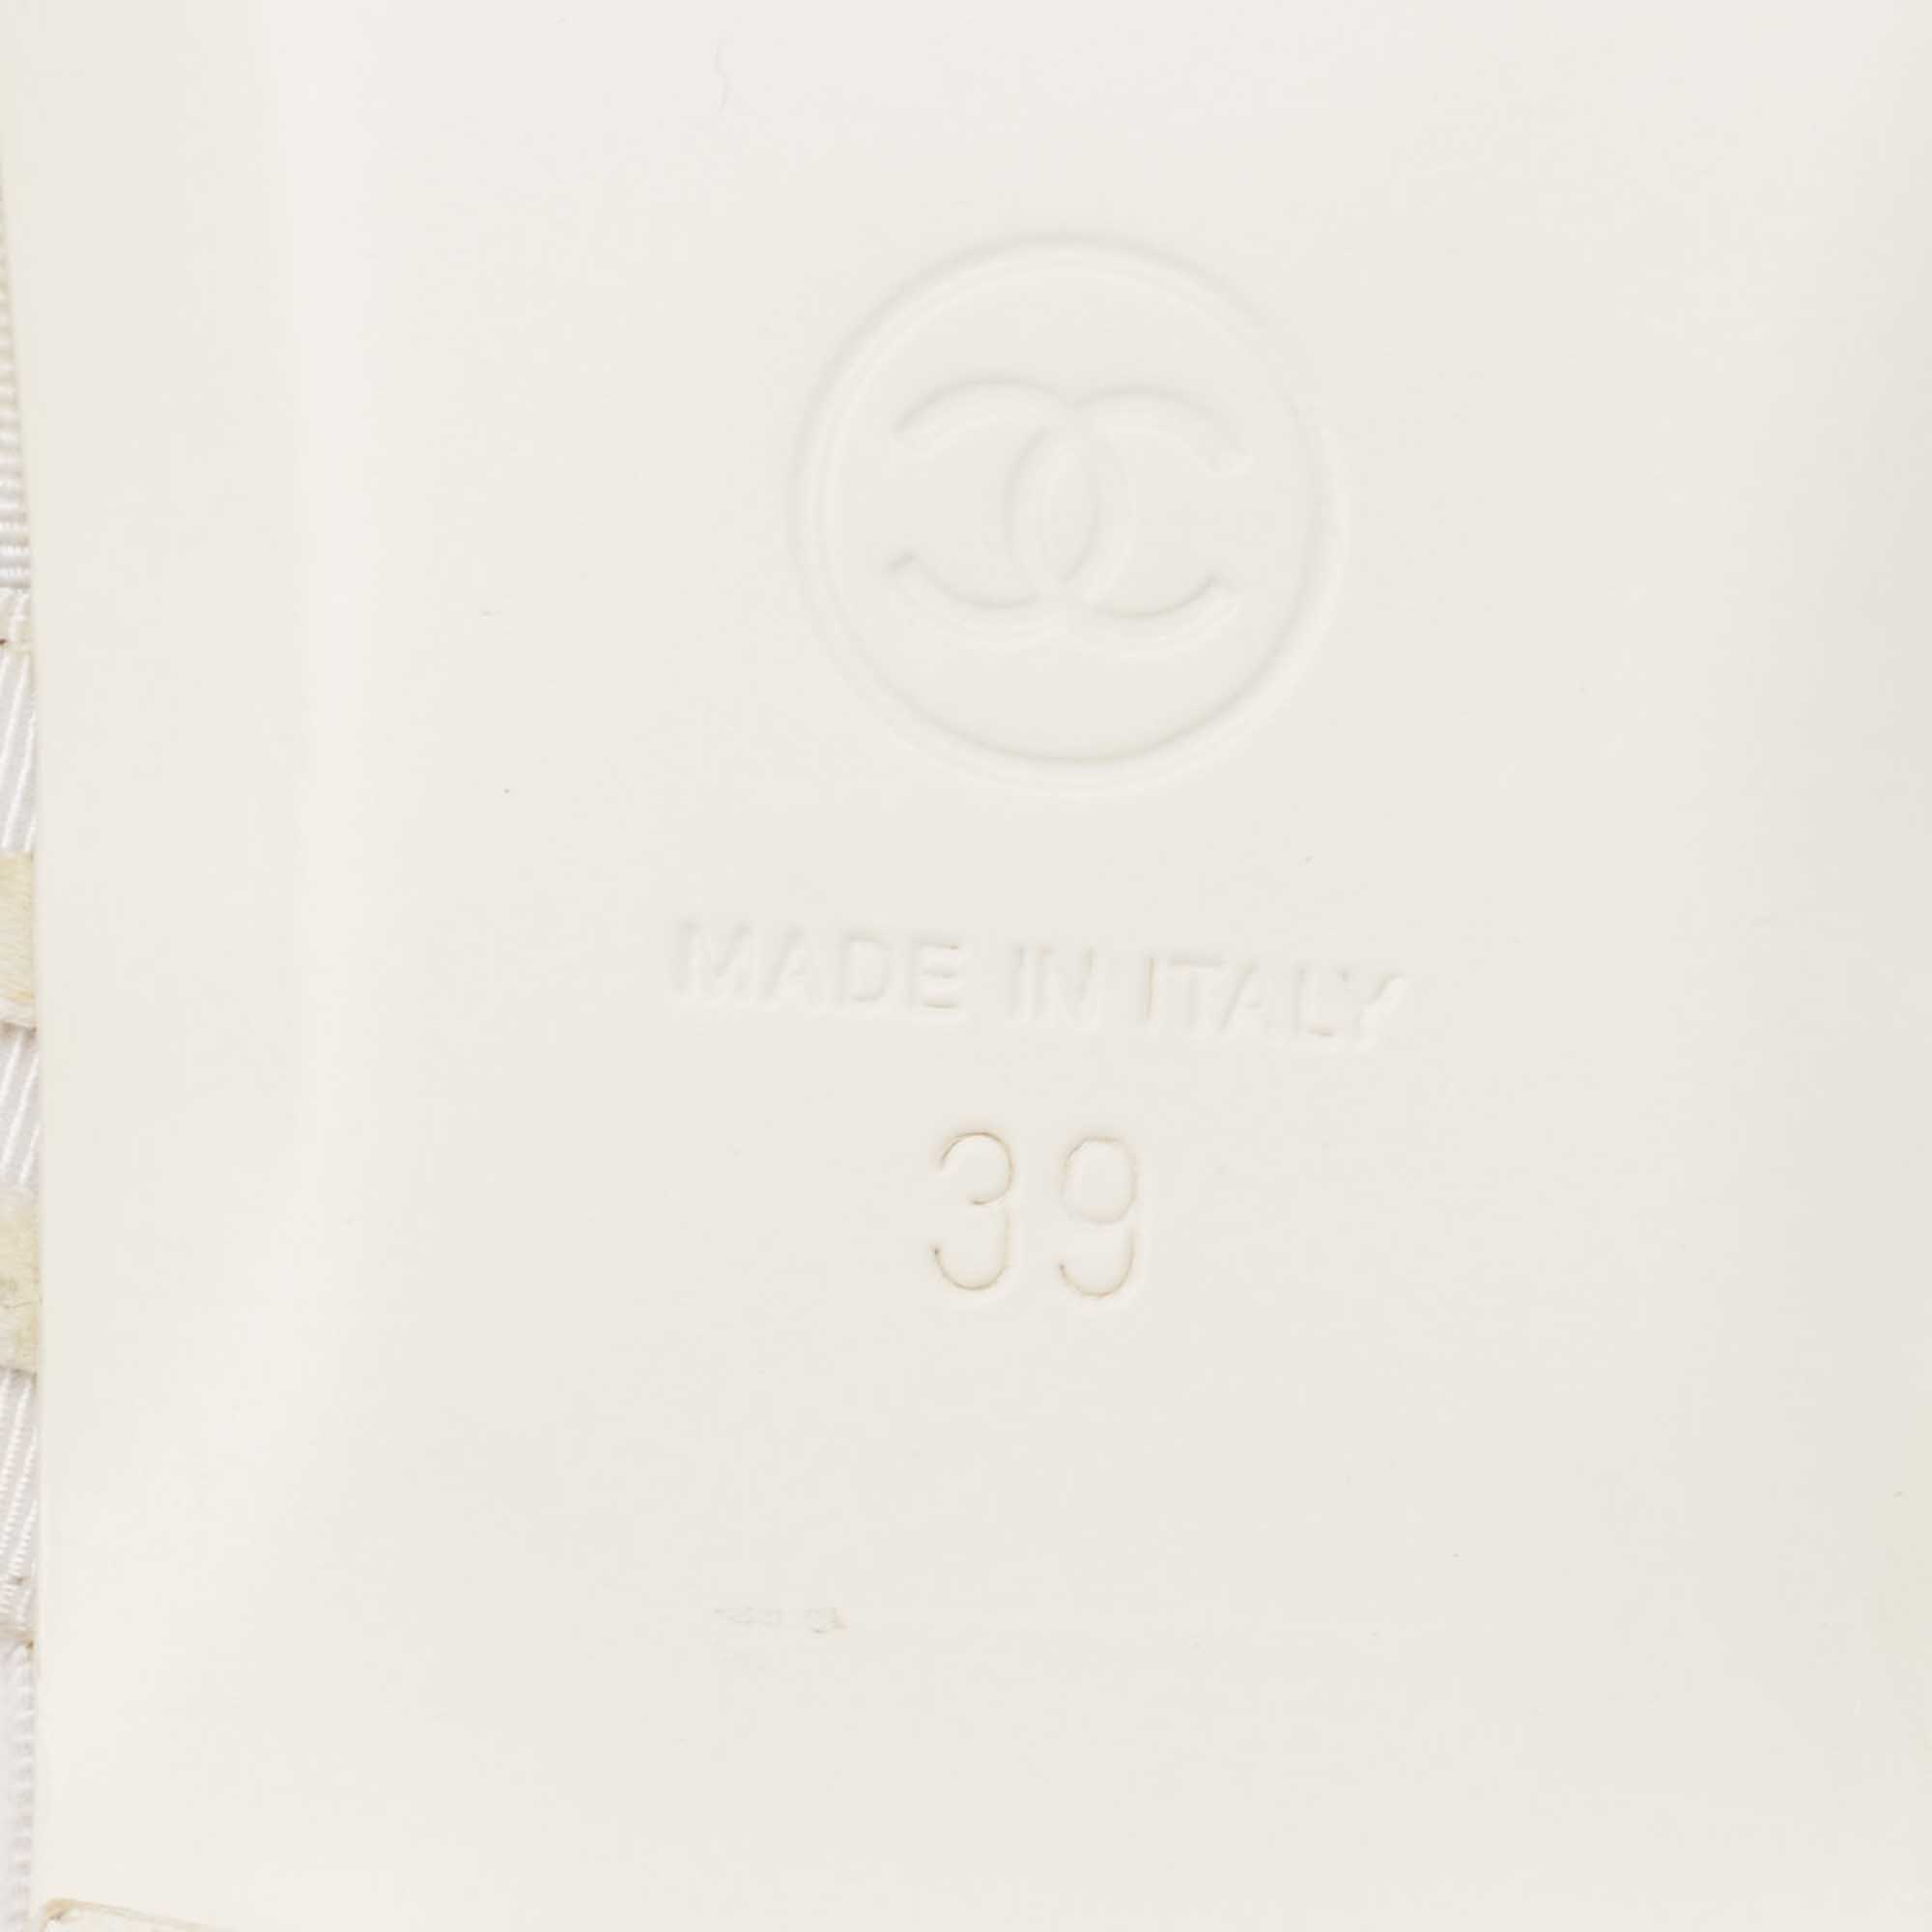 Chanel White Canvas Interlocking CC Thong Sandals Size 39